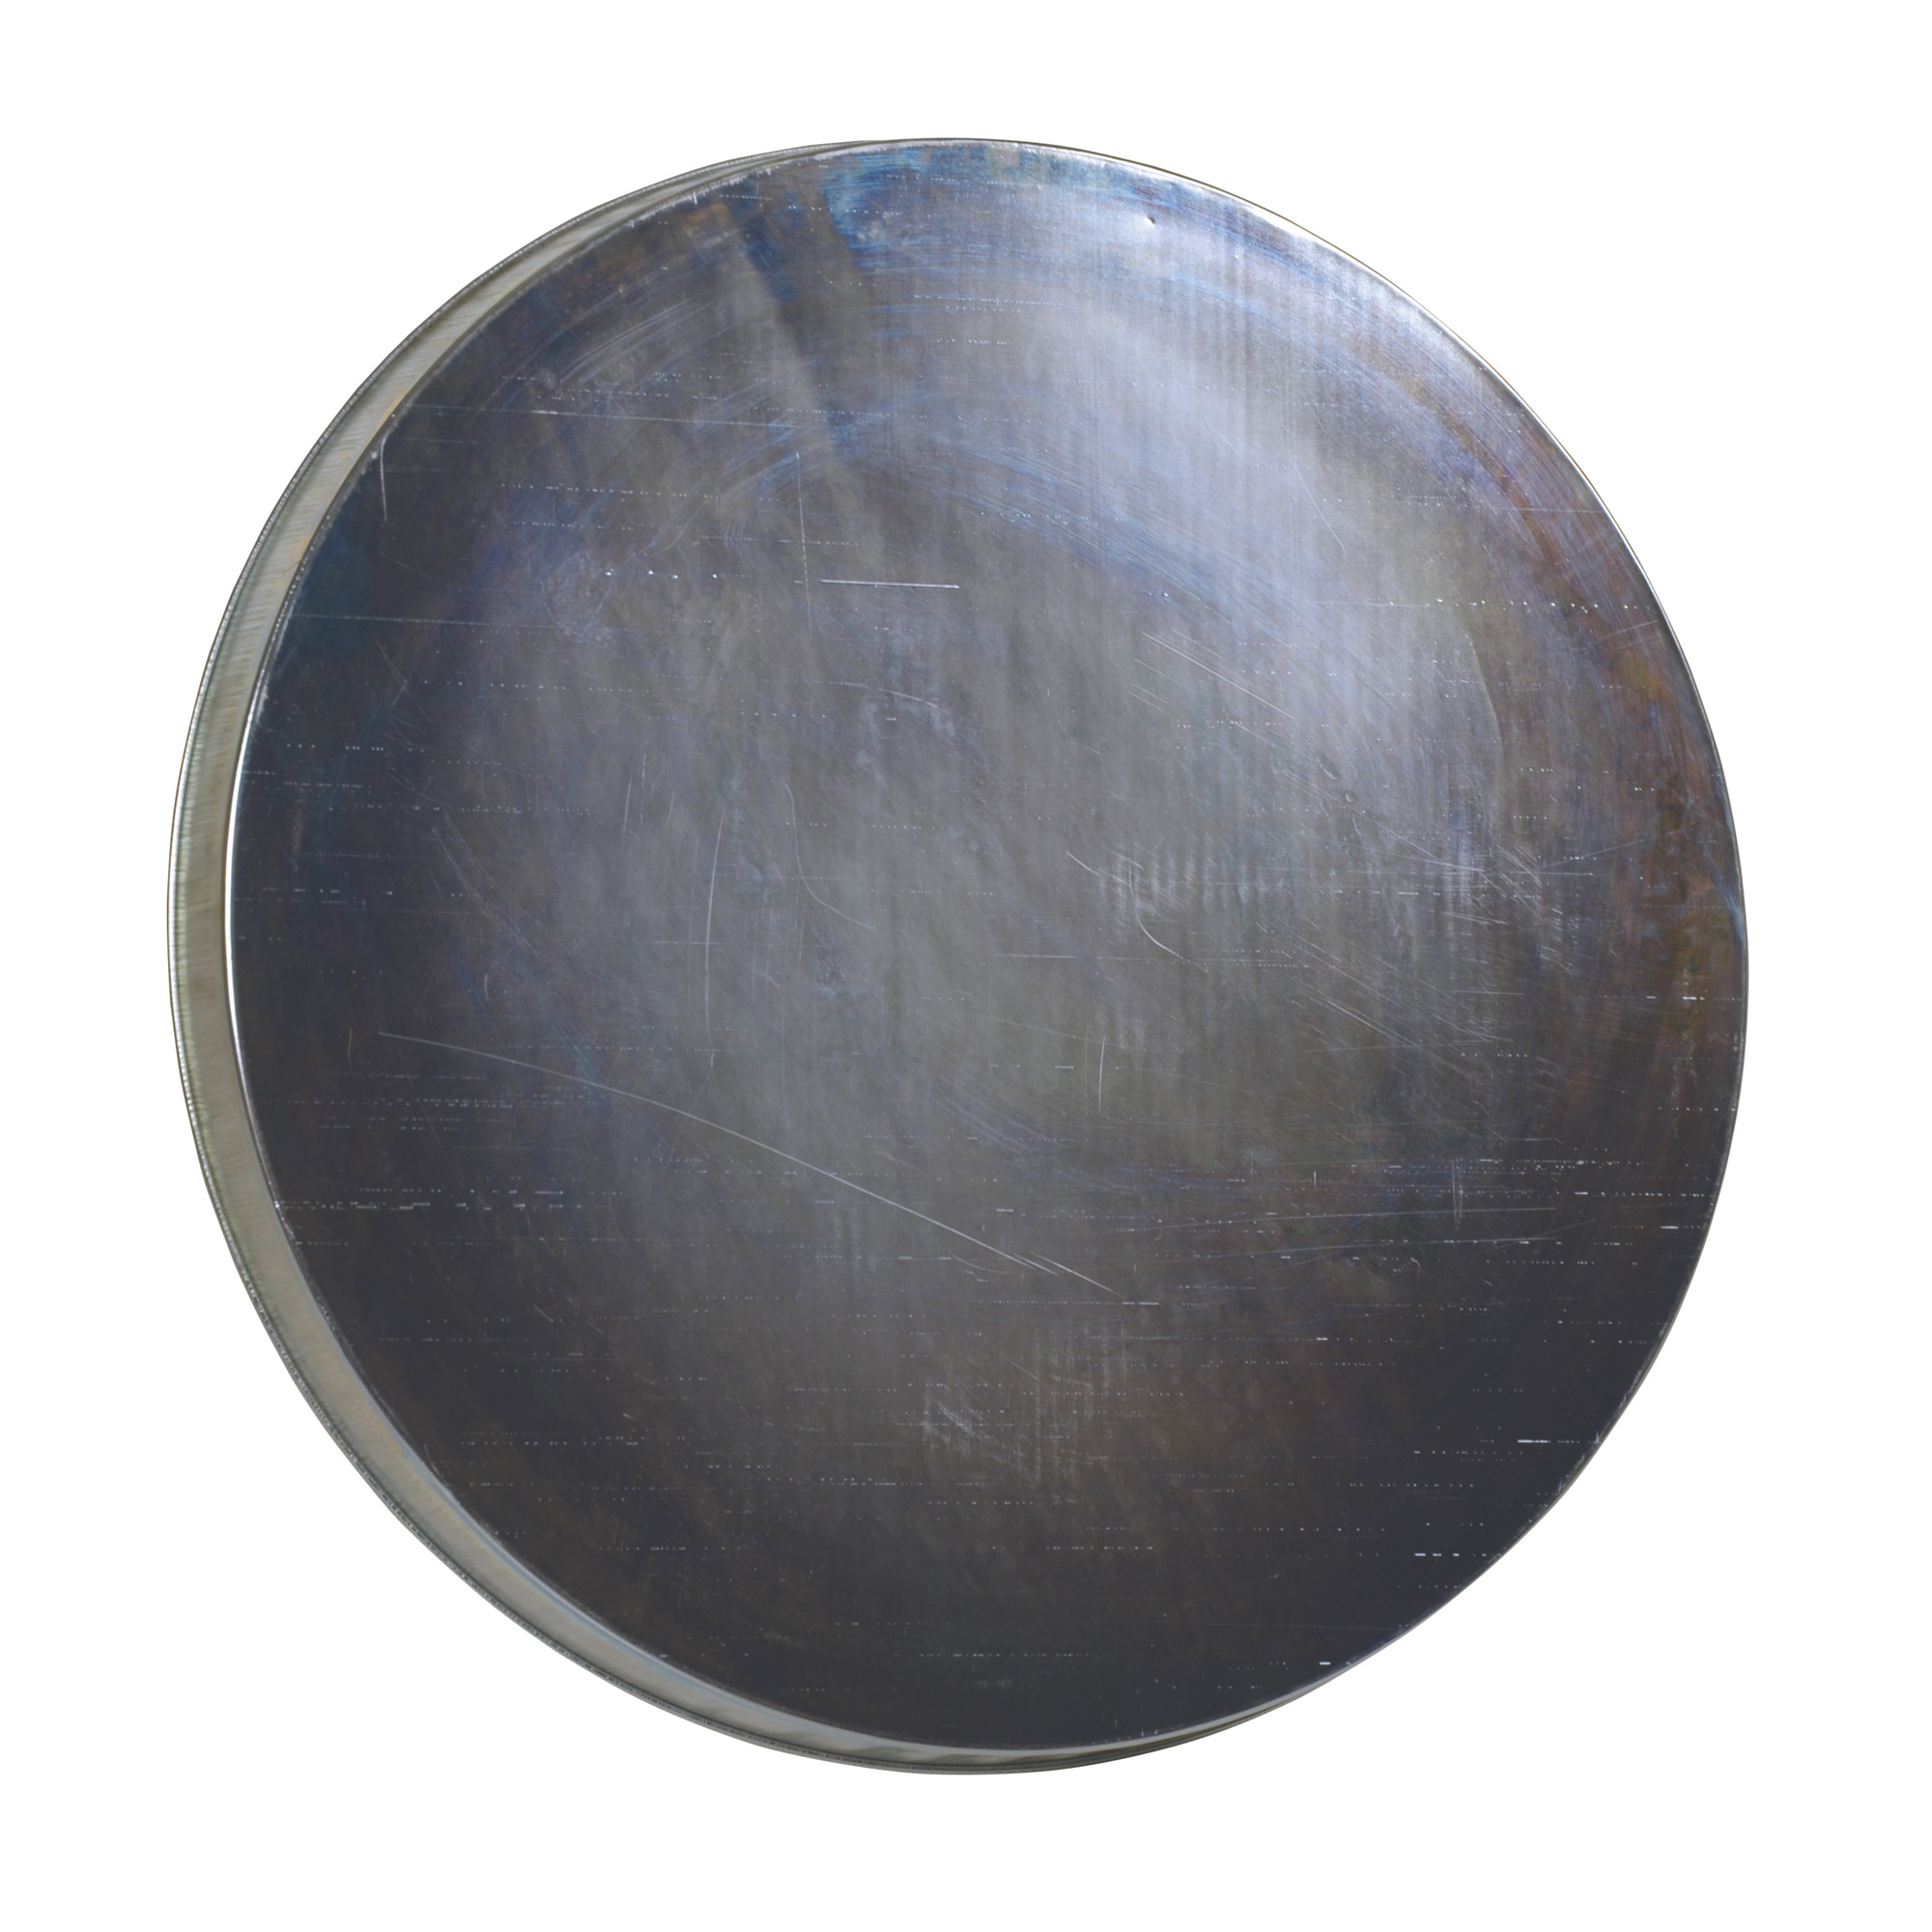 Vestil, Galvanized open head drum cover, Diameter 25 in, Material Steel, Model DC-245